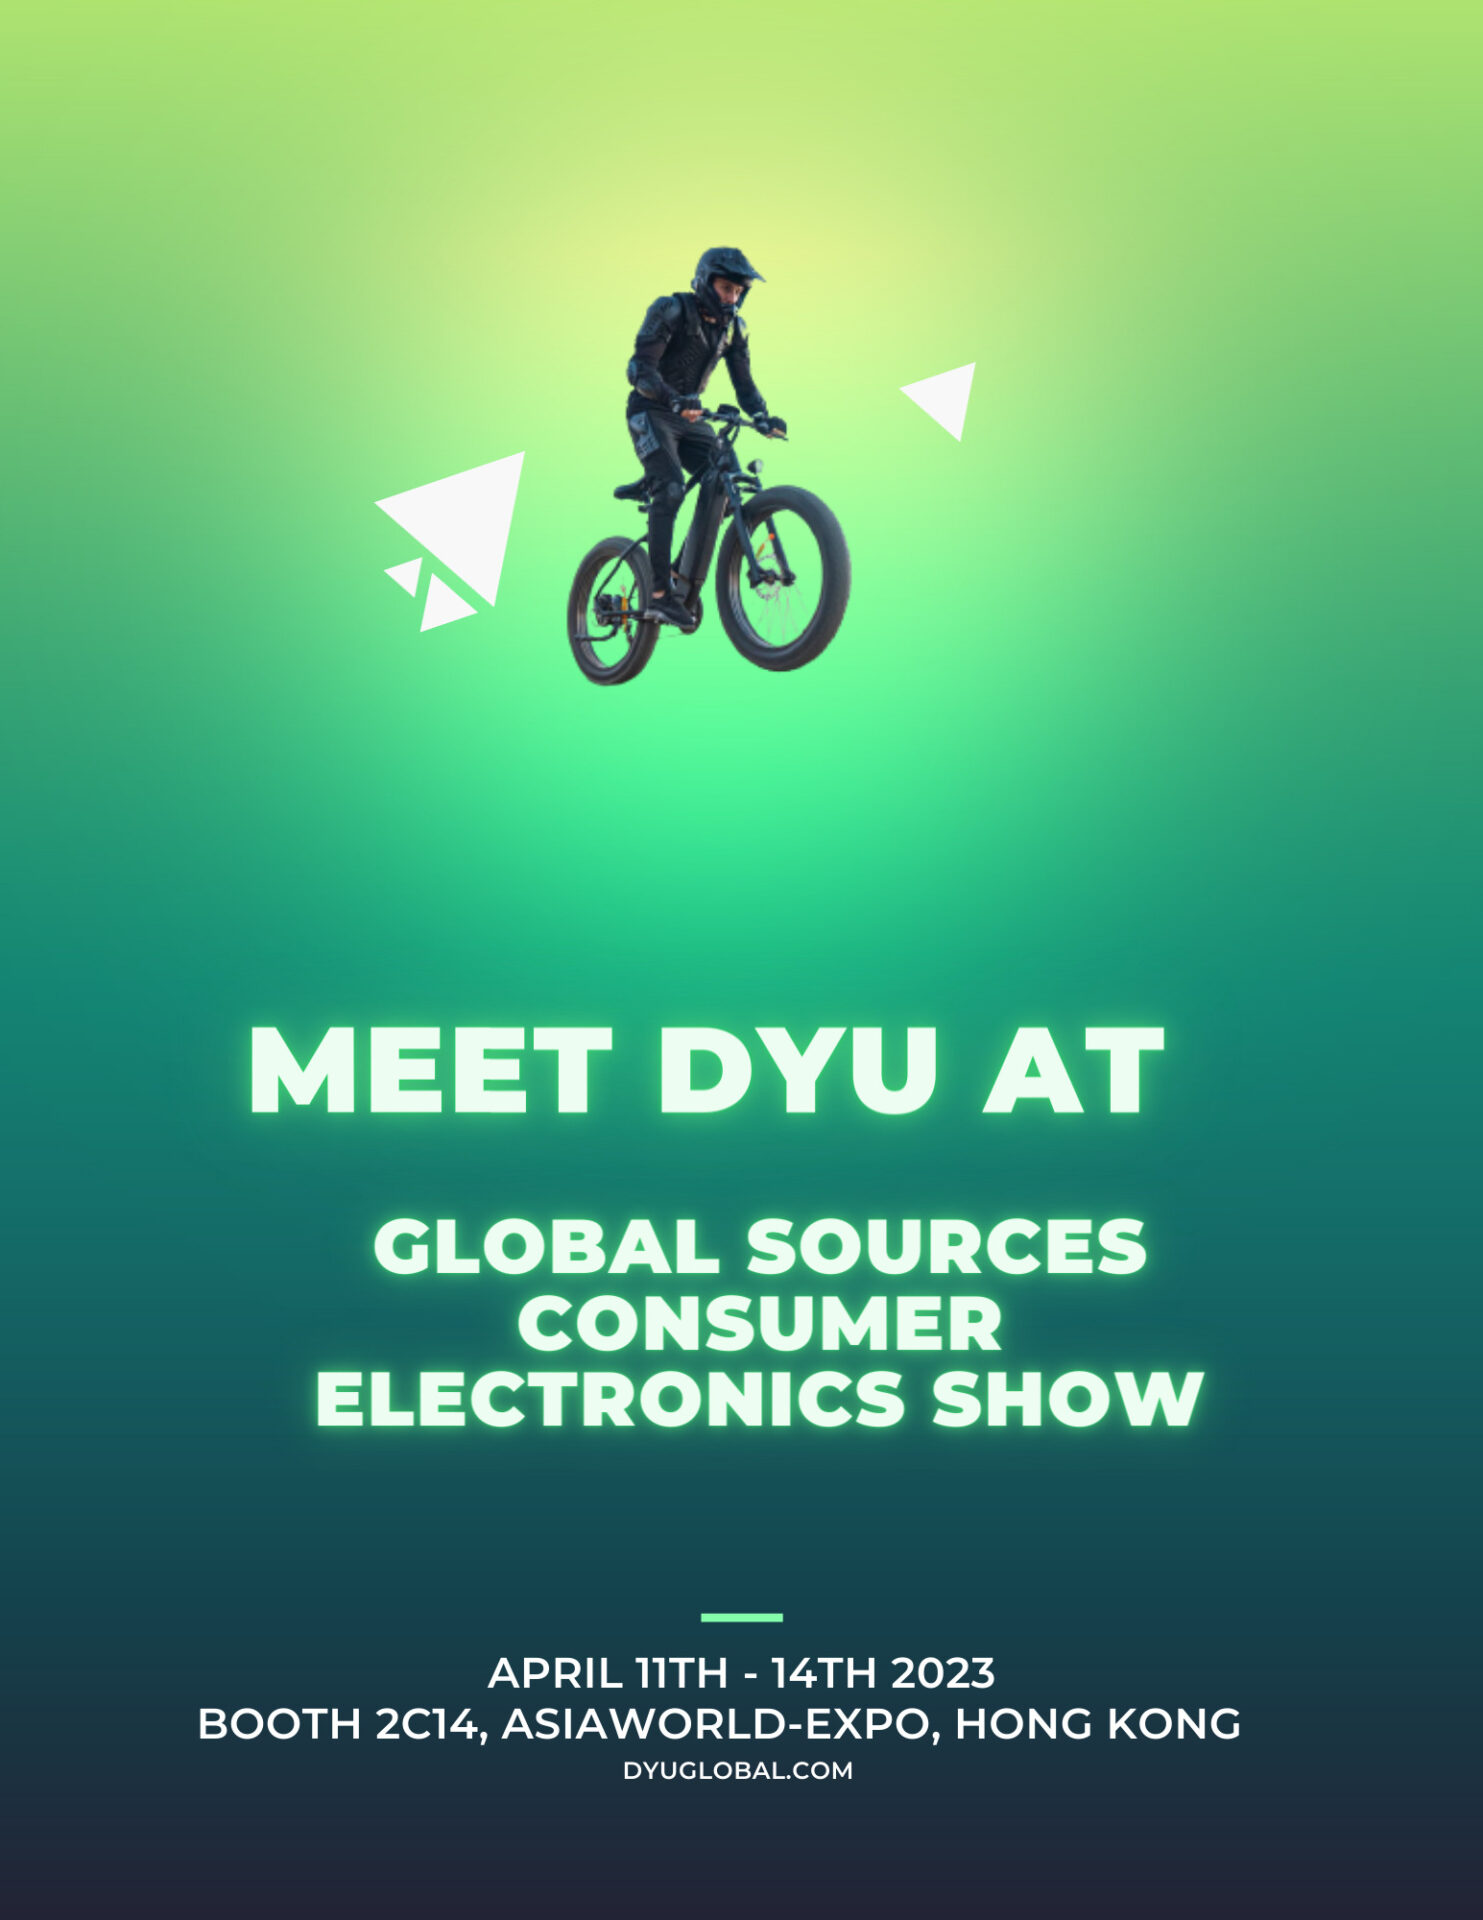 DYU participa en el Global Sources Consumer Electronics Show Hong Kong